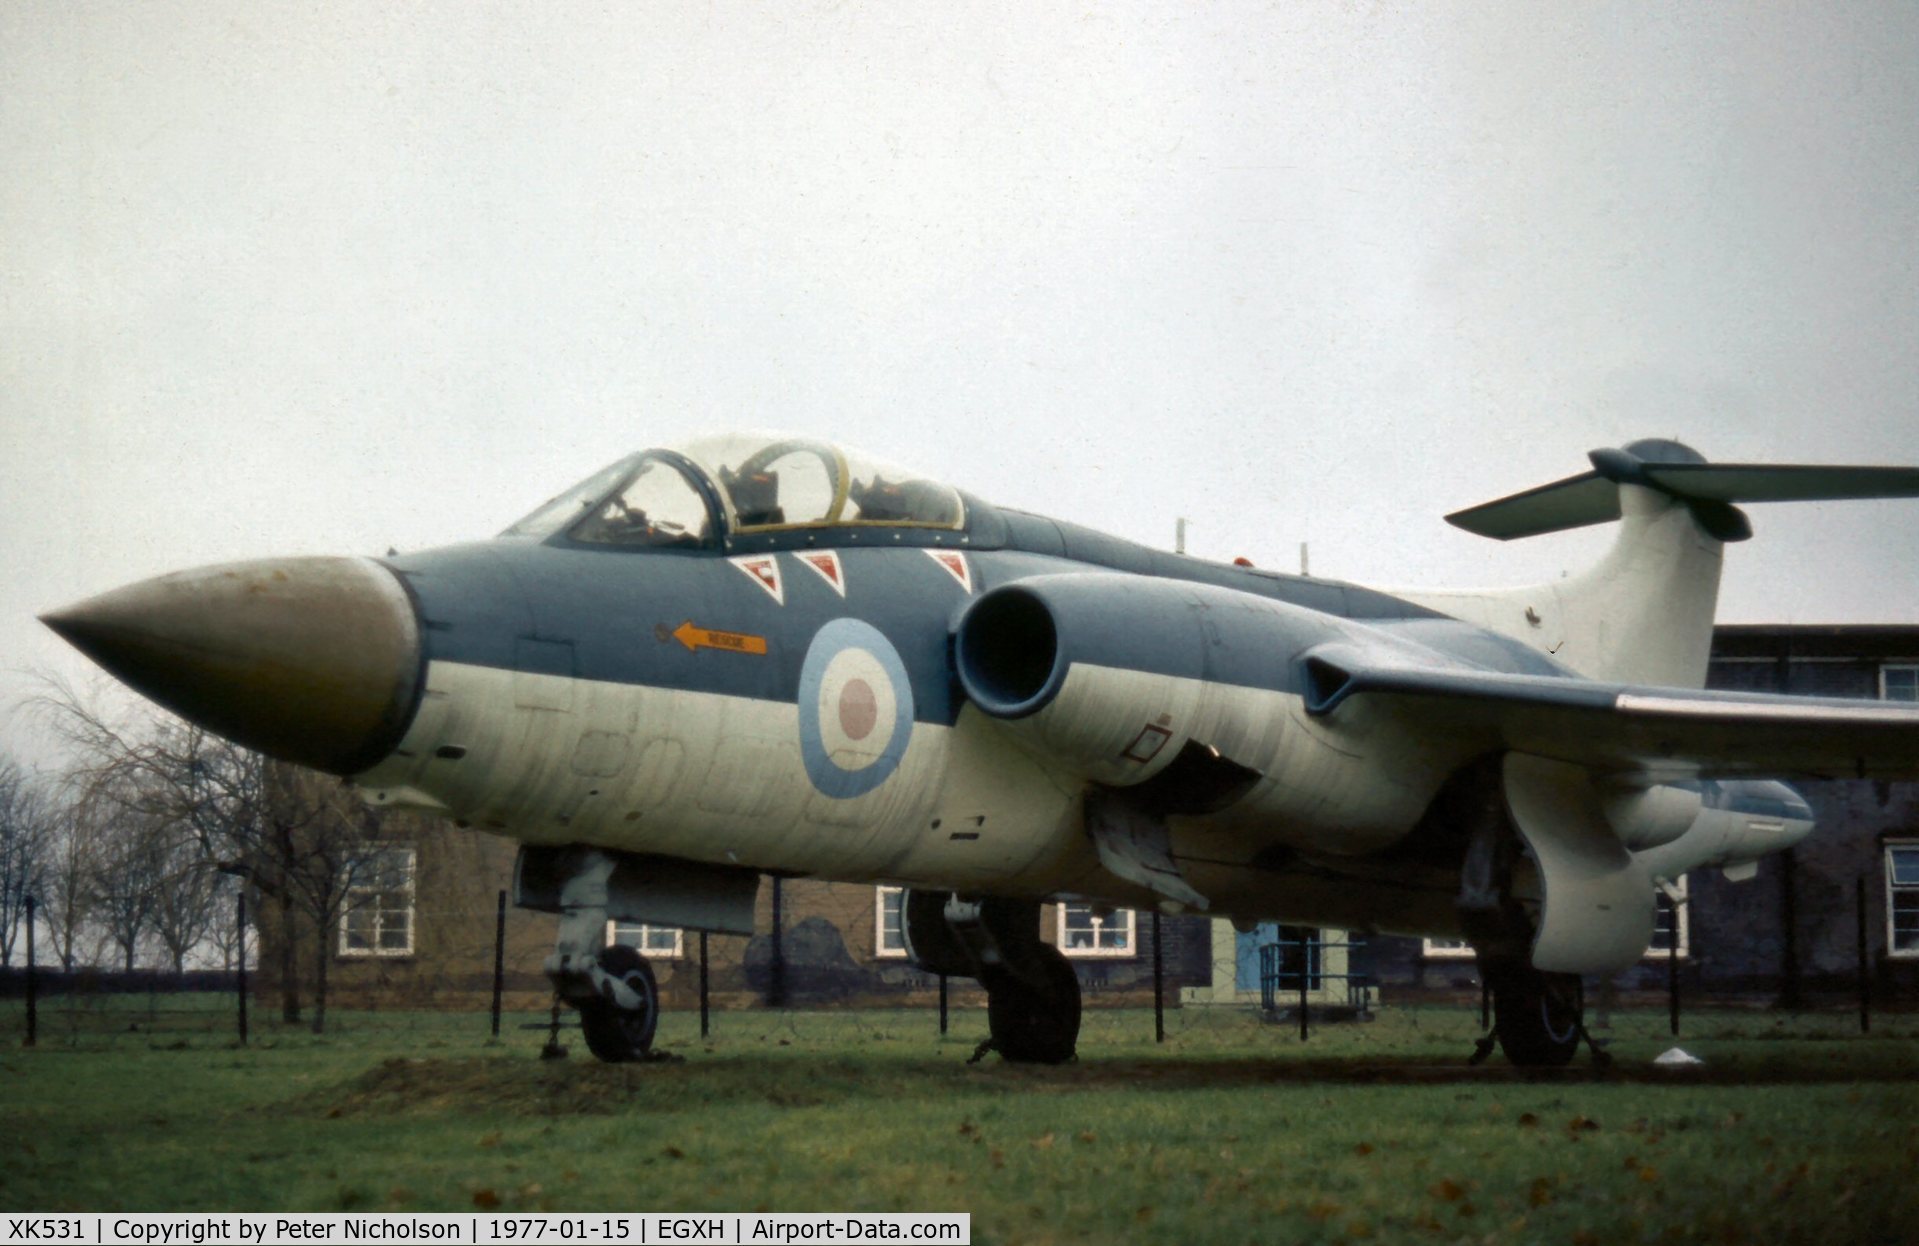 XK531, 1961 Blackburn Buccaneer S.1 C/N B3-05-60, Buccaneer S.1 XK 531 was a gate guardian at RAF Honington in January 1977.